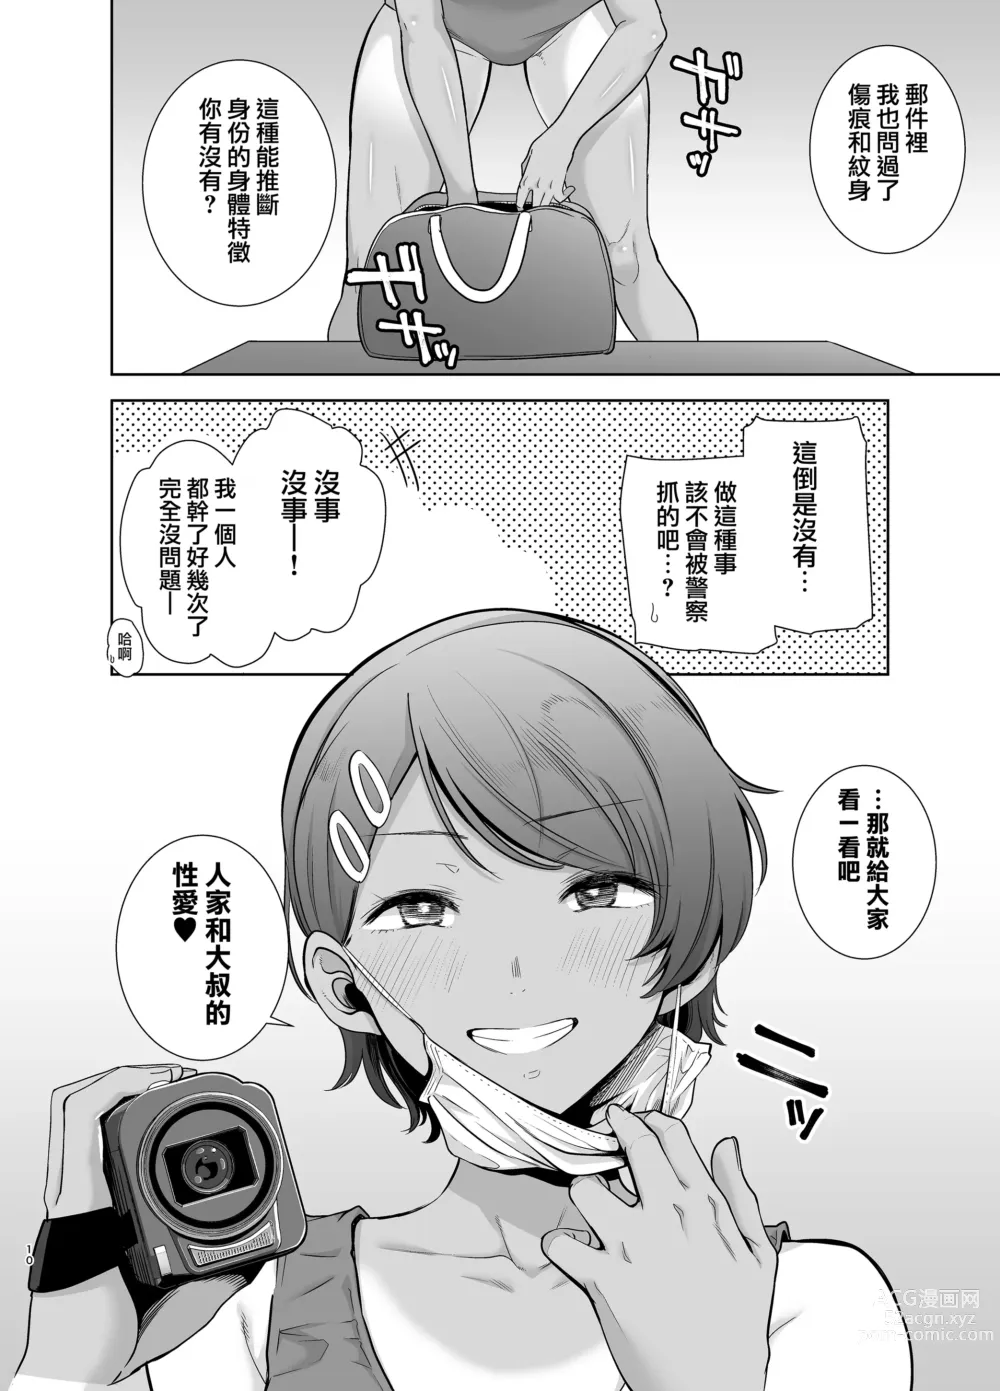 Page 10 of manga 聖華女学院高等部公認竿おじさん 2